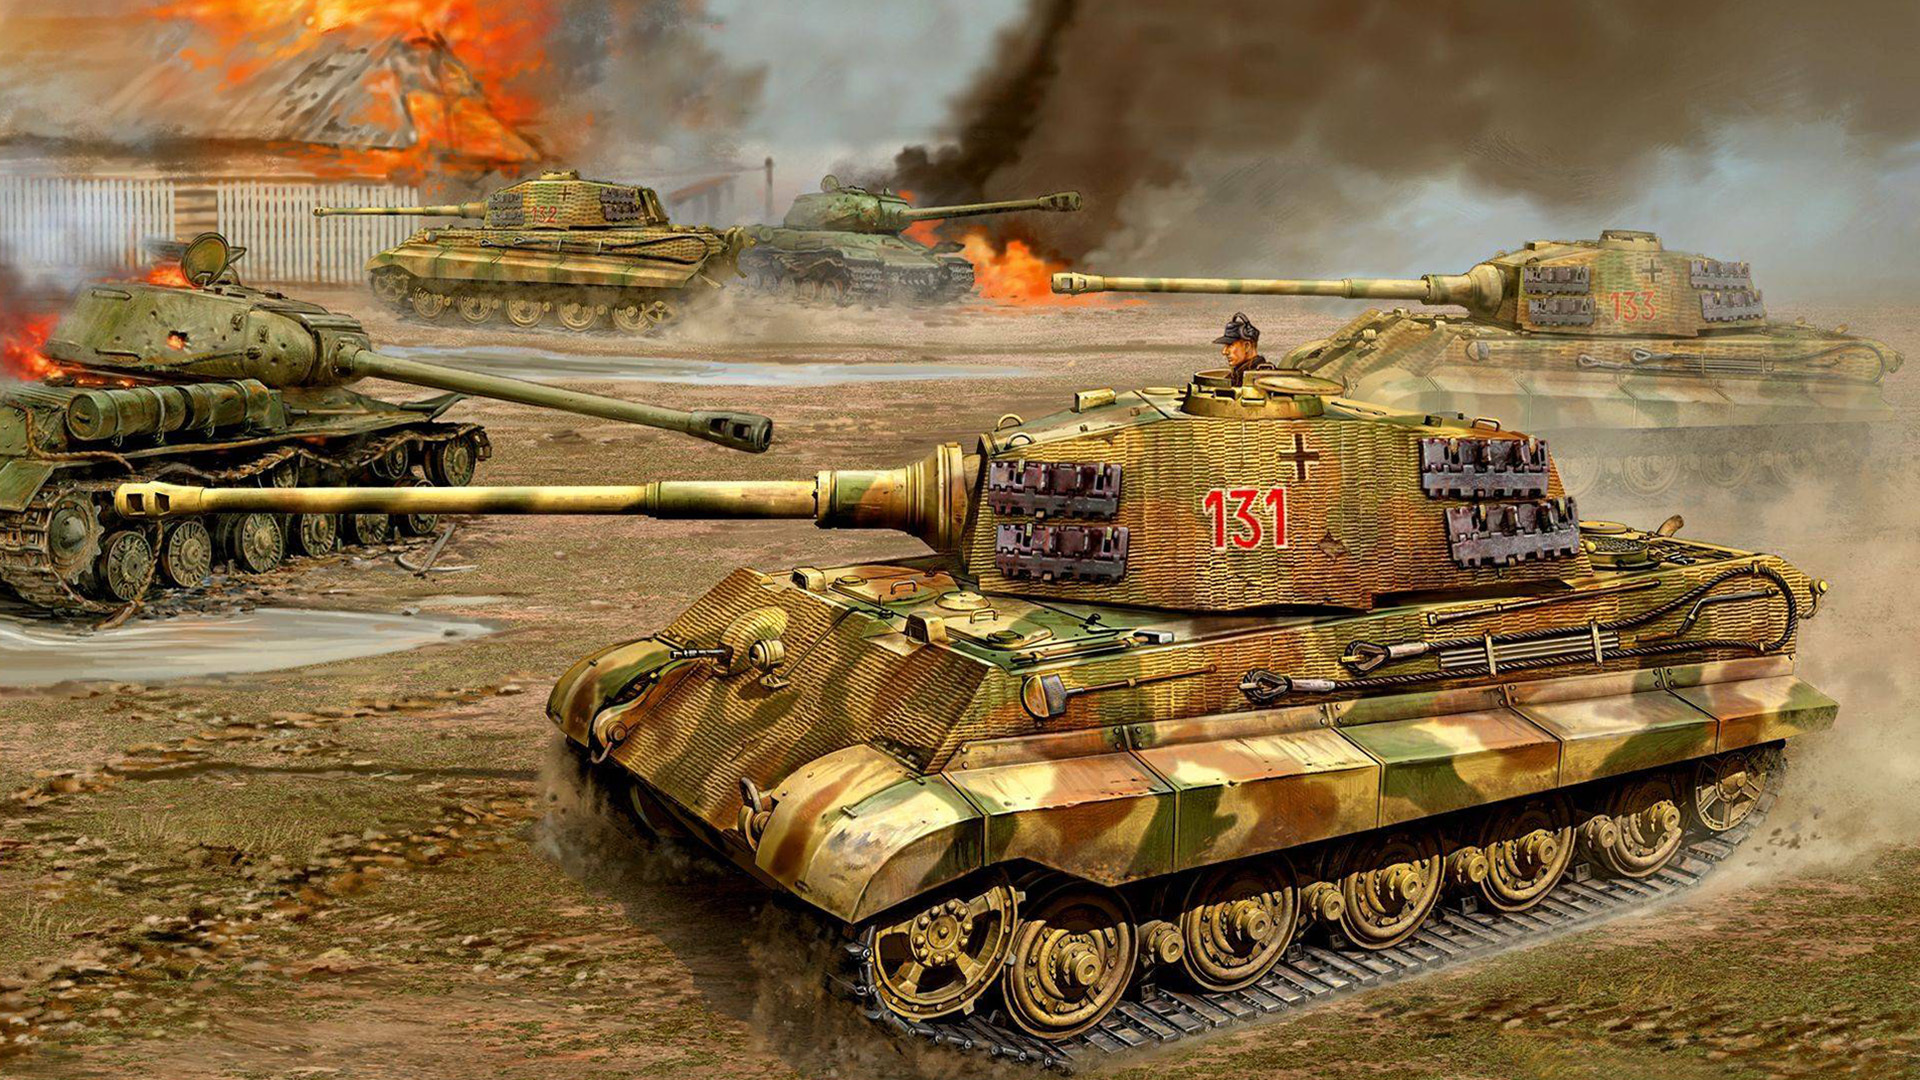  tank flames of war tiger ii kingtiger wallpapers photos pictures